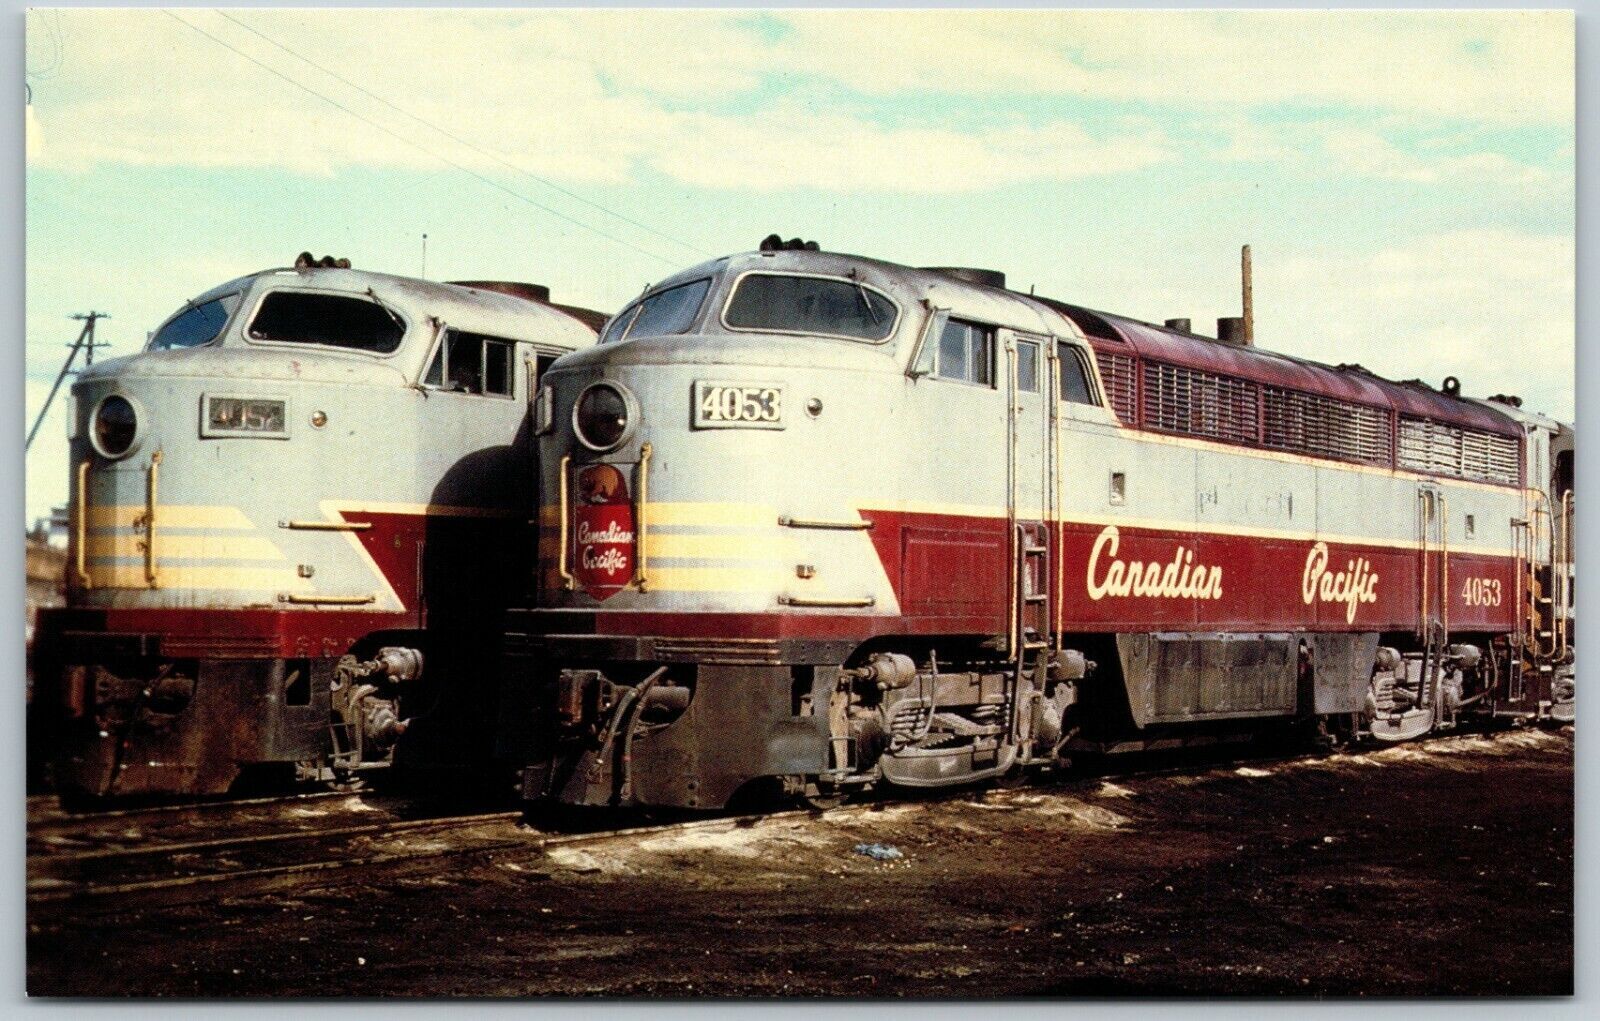 Postcard Pair of Canadian Pacific Diesel C-Line CPA16-4 #4053 Passenger Train